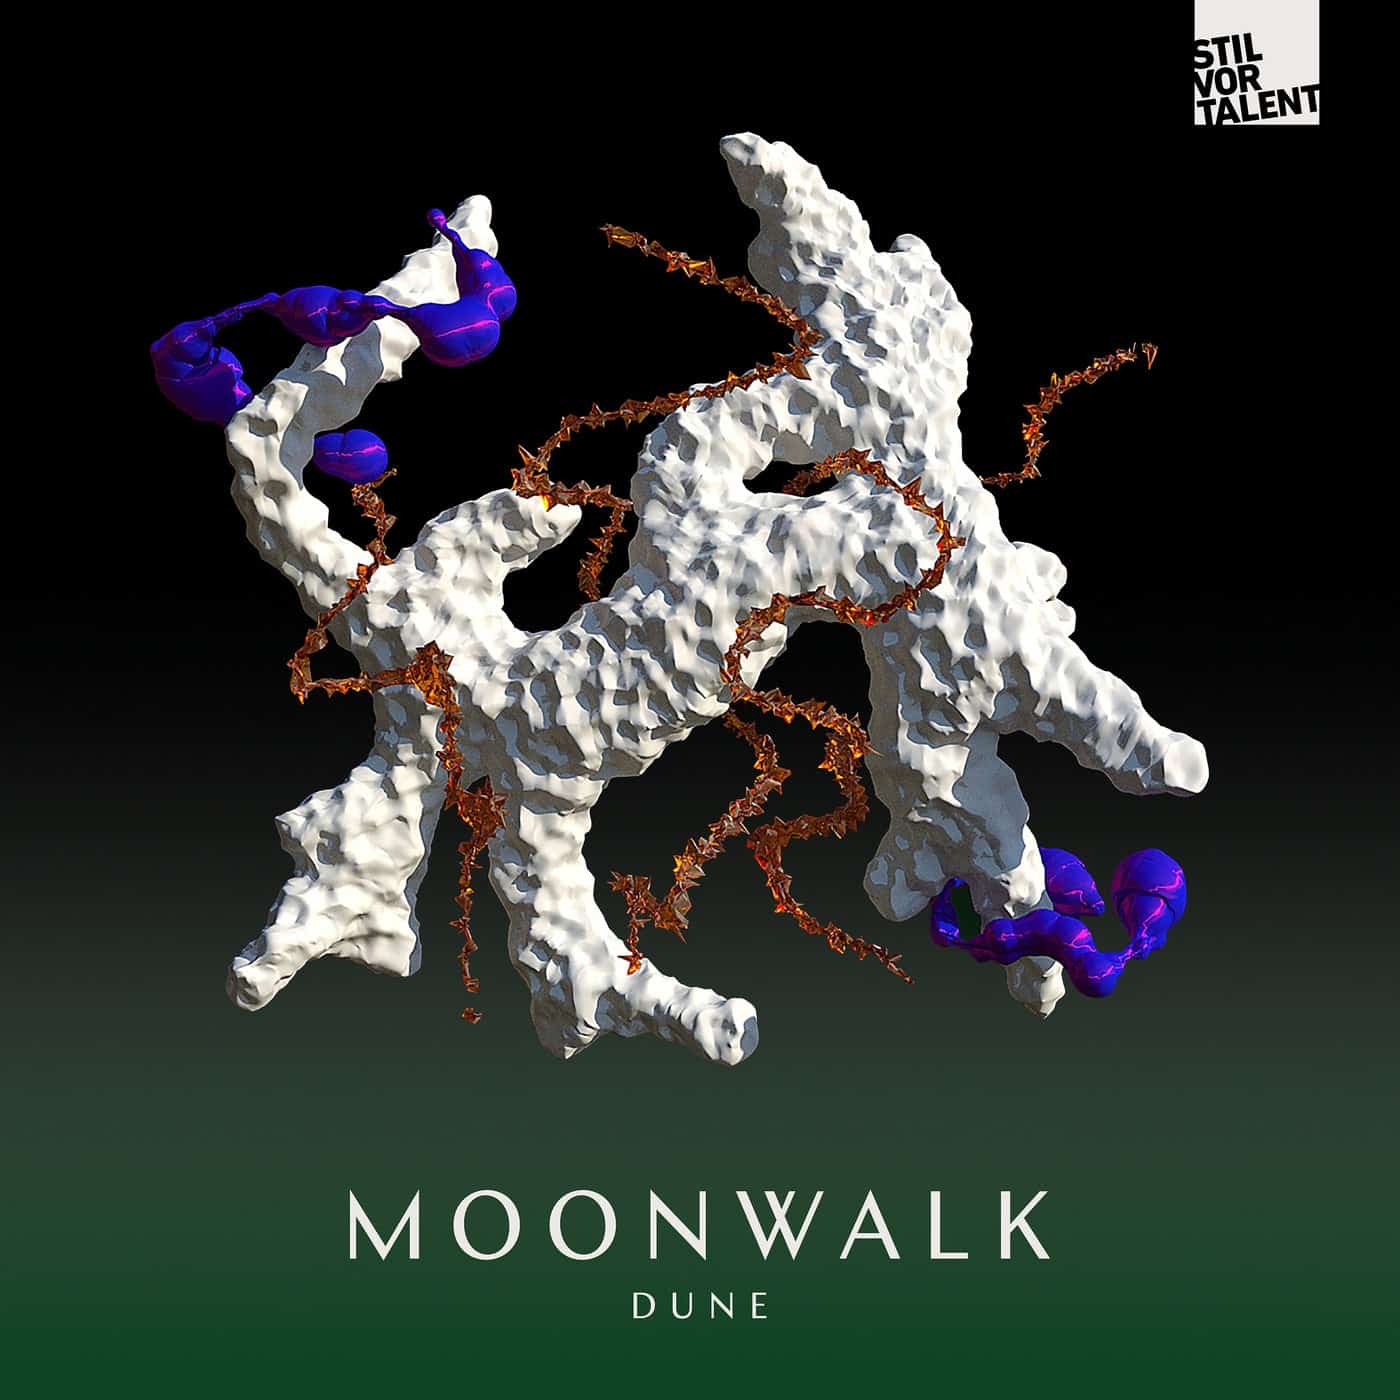 Download Moonwalk - Dune on Electrobuzz